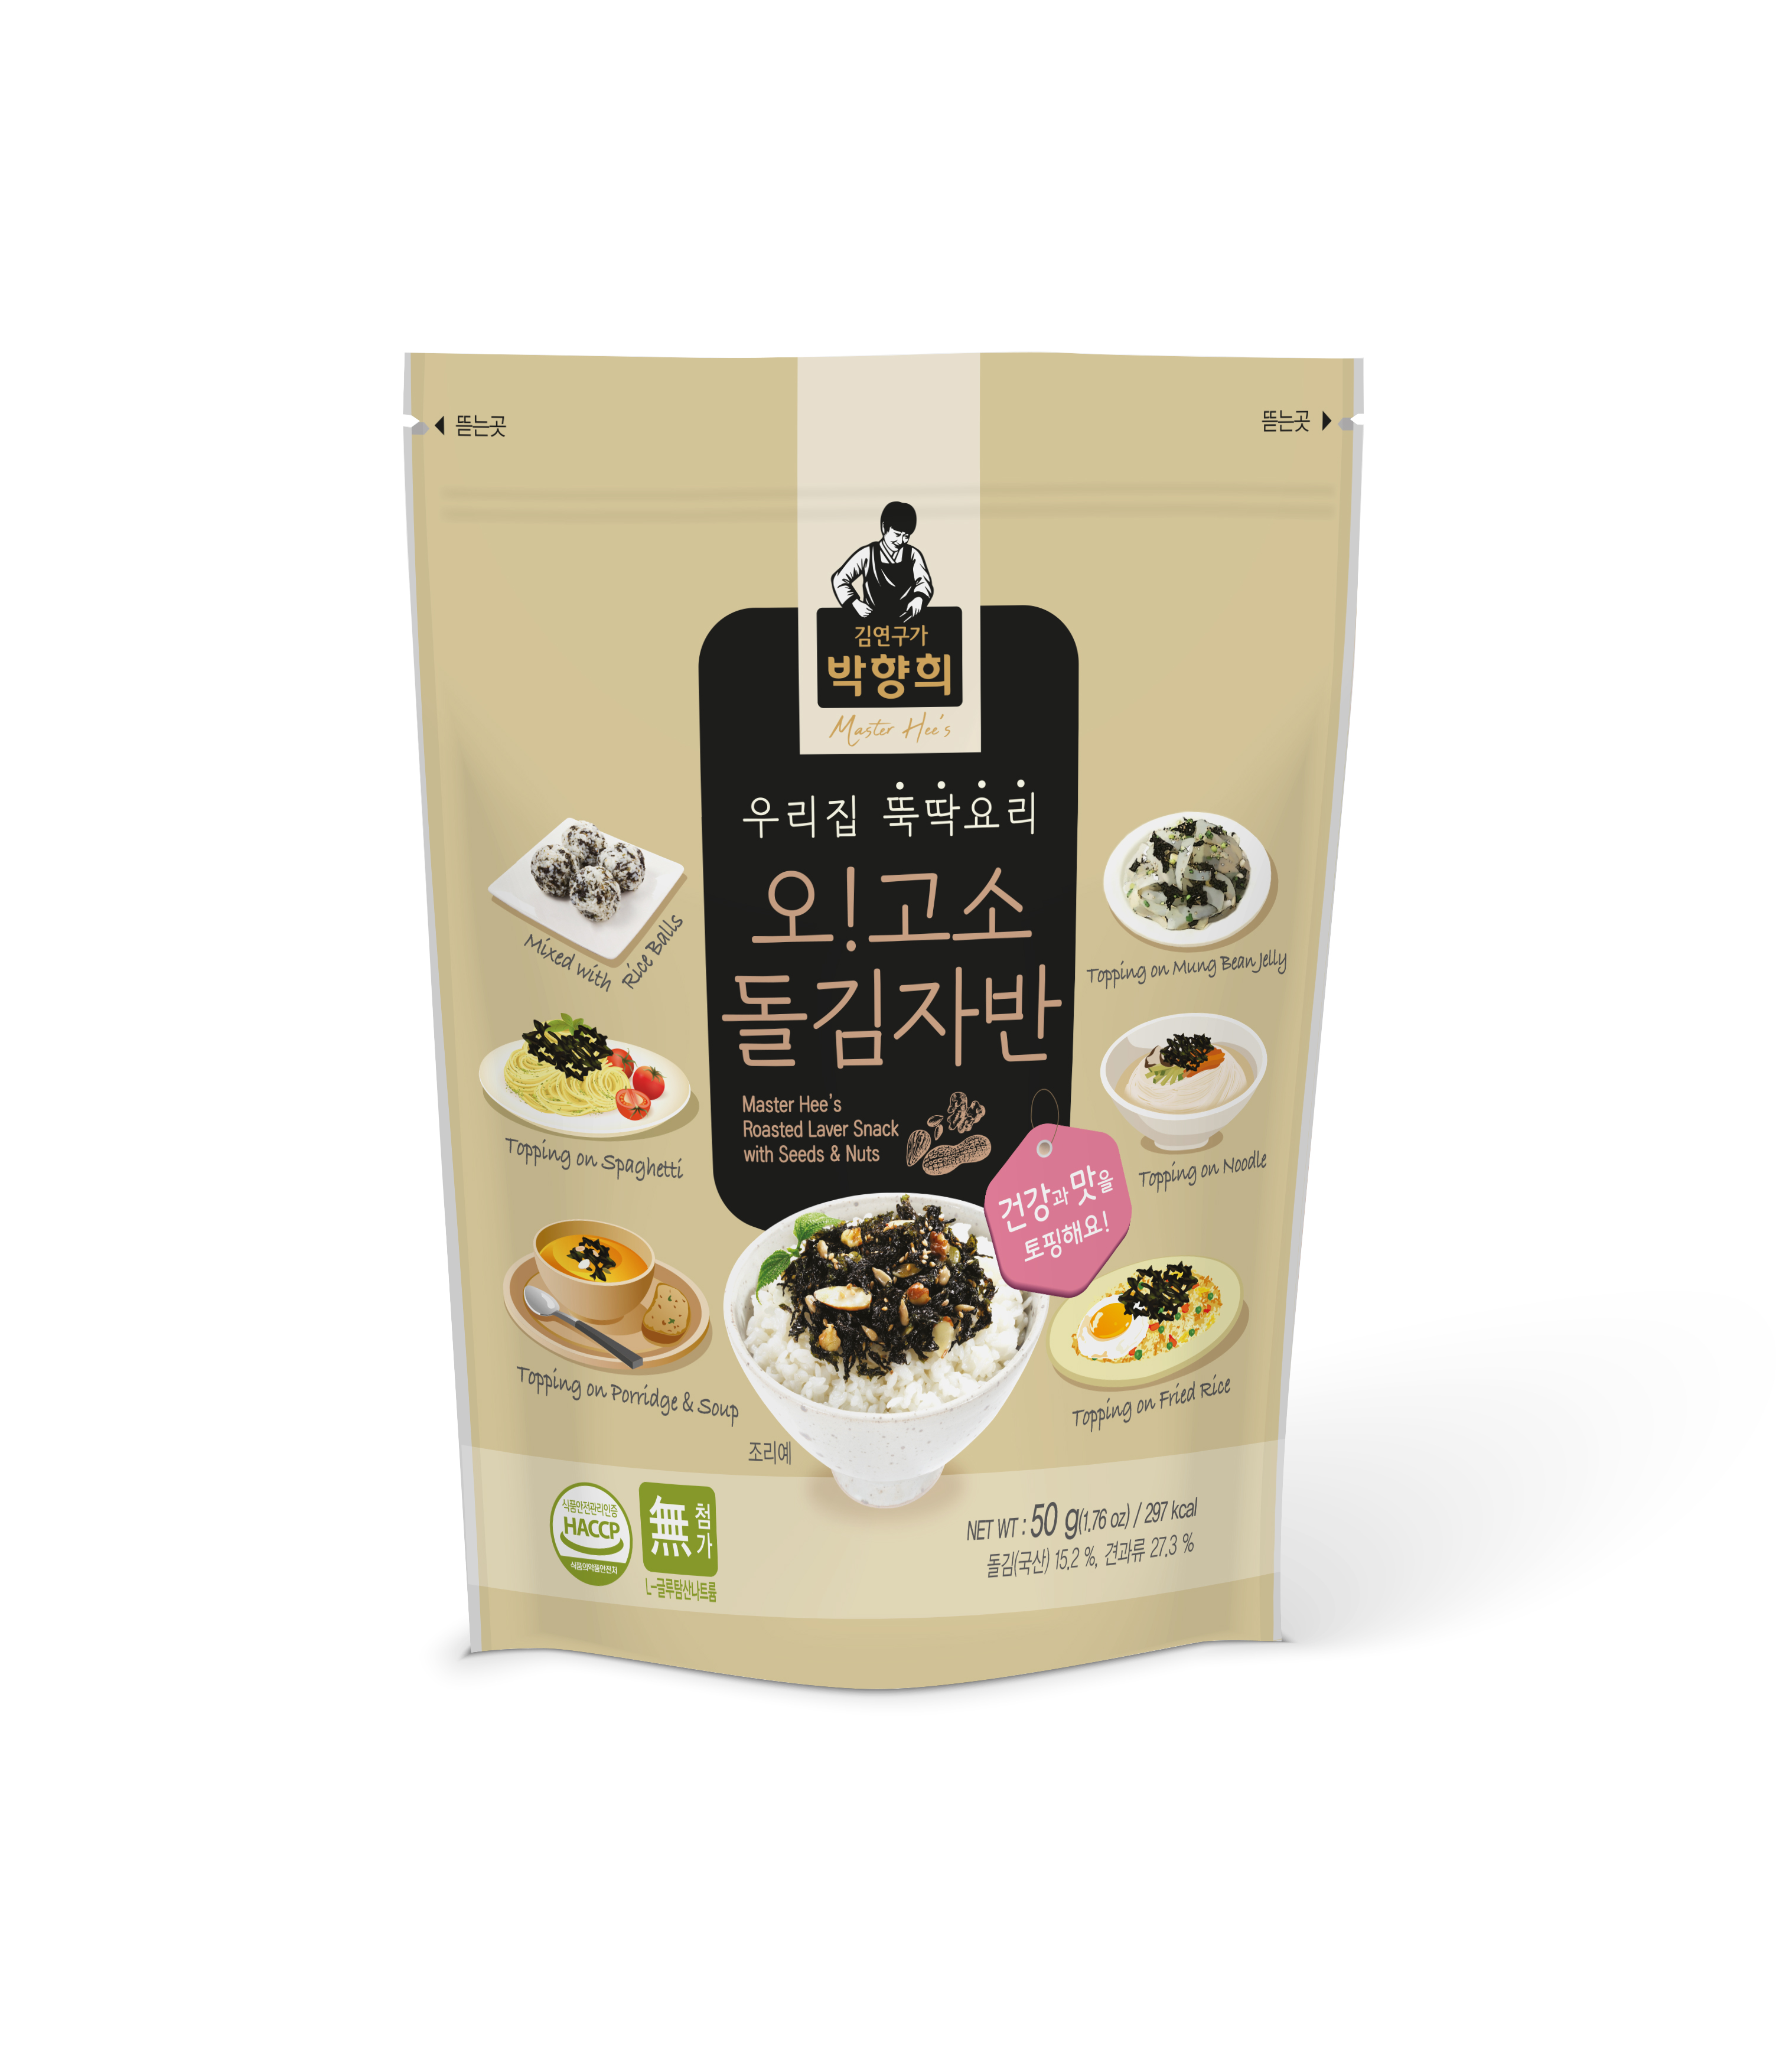 ¡Oh! 50 g de sartén de kimchi para la denuncia